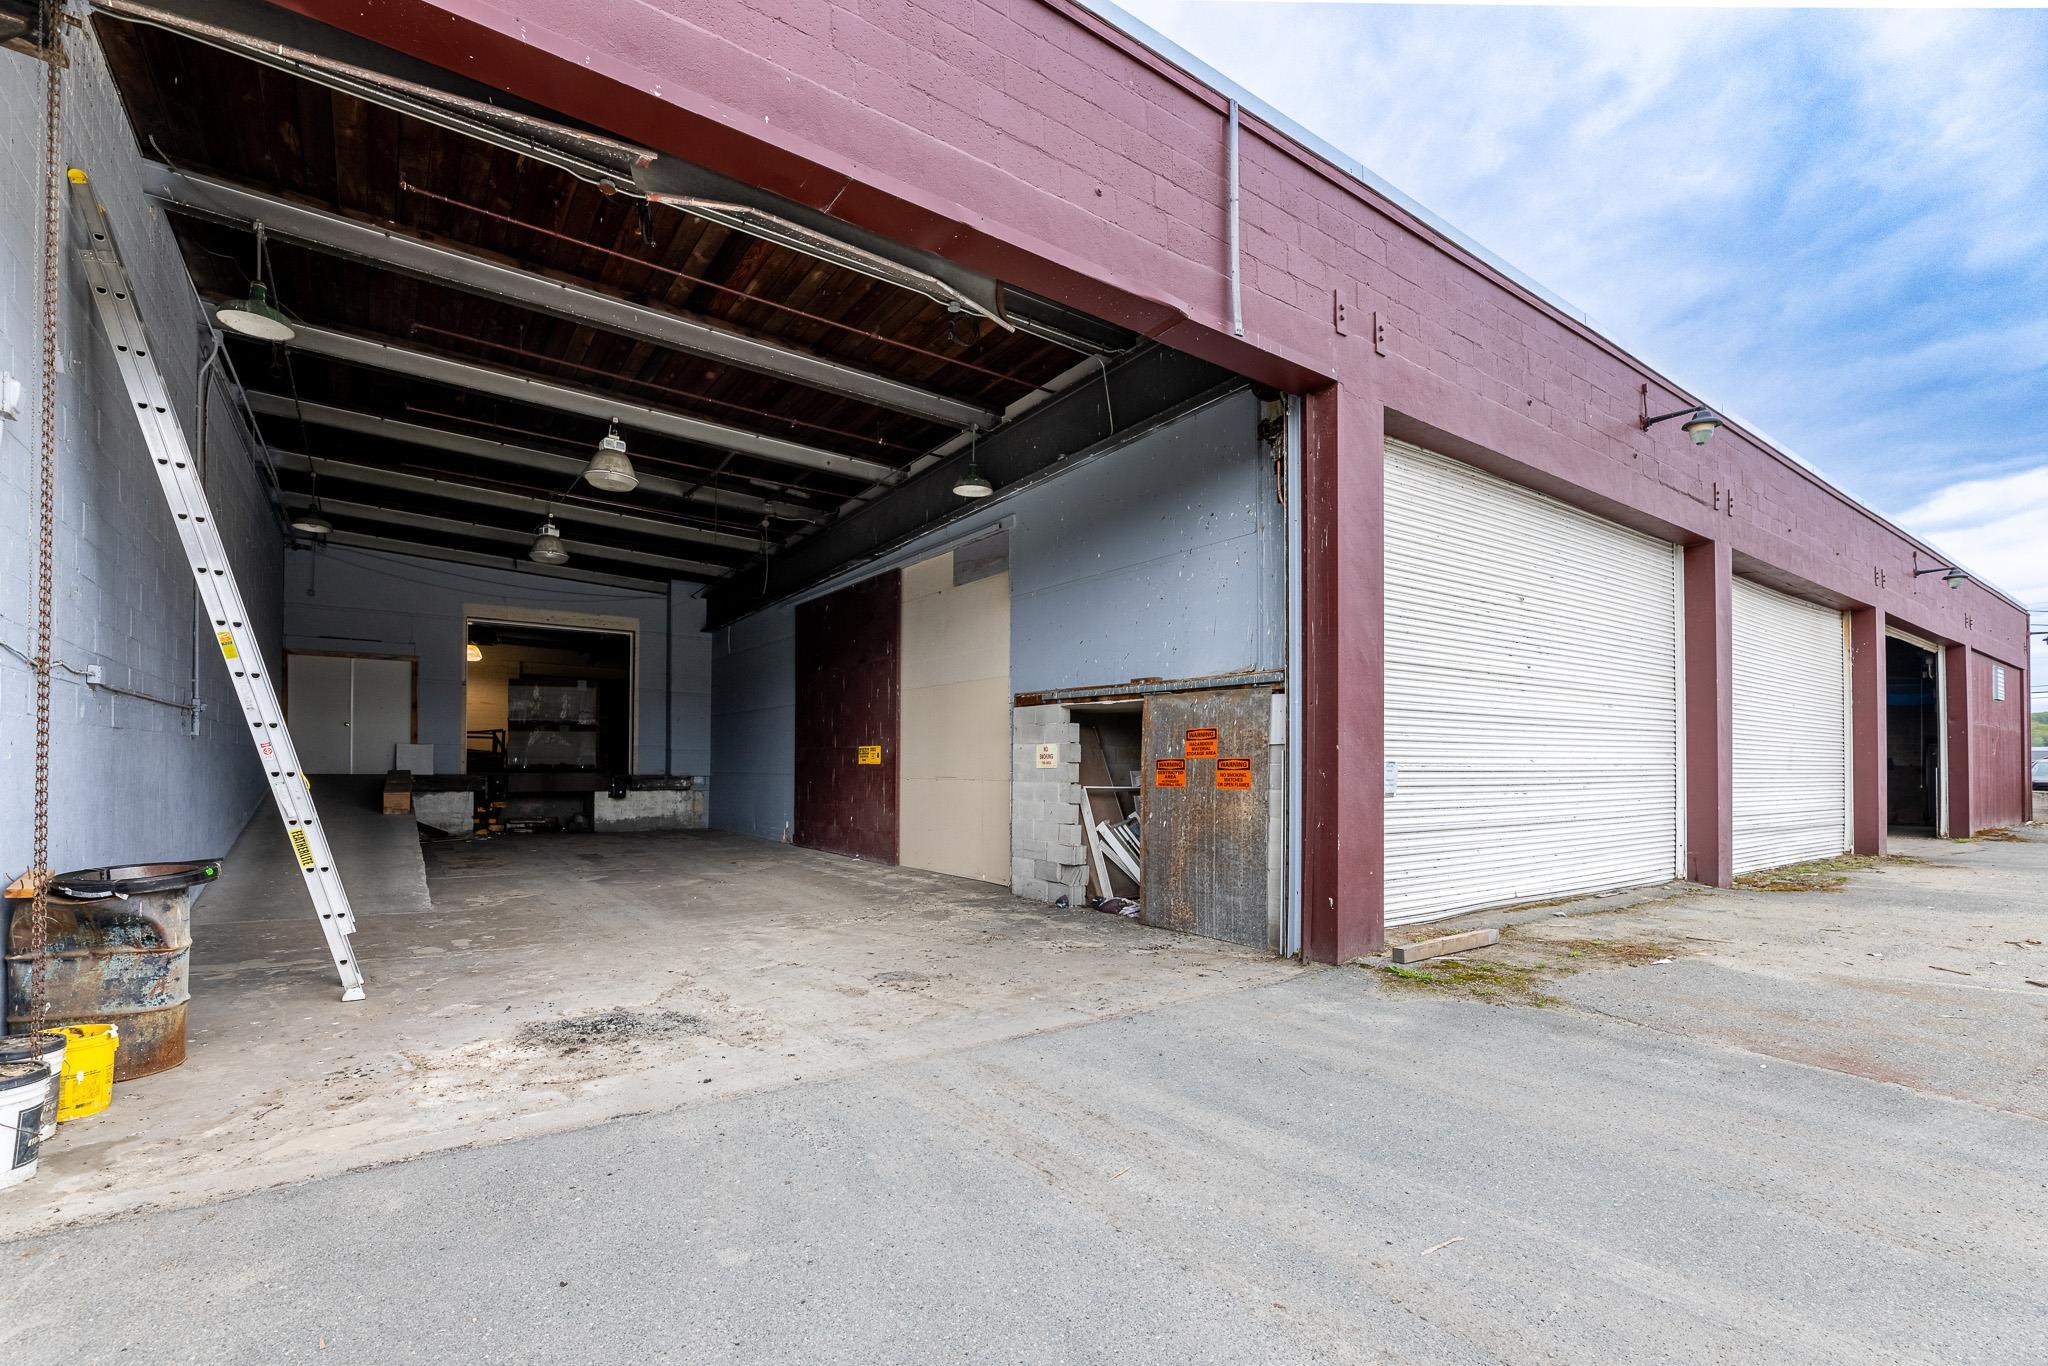 Enclosed loading dock